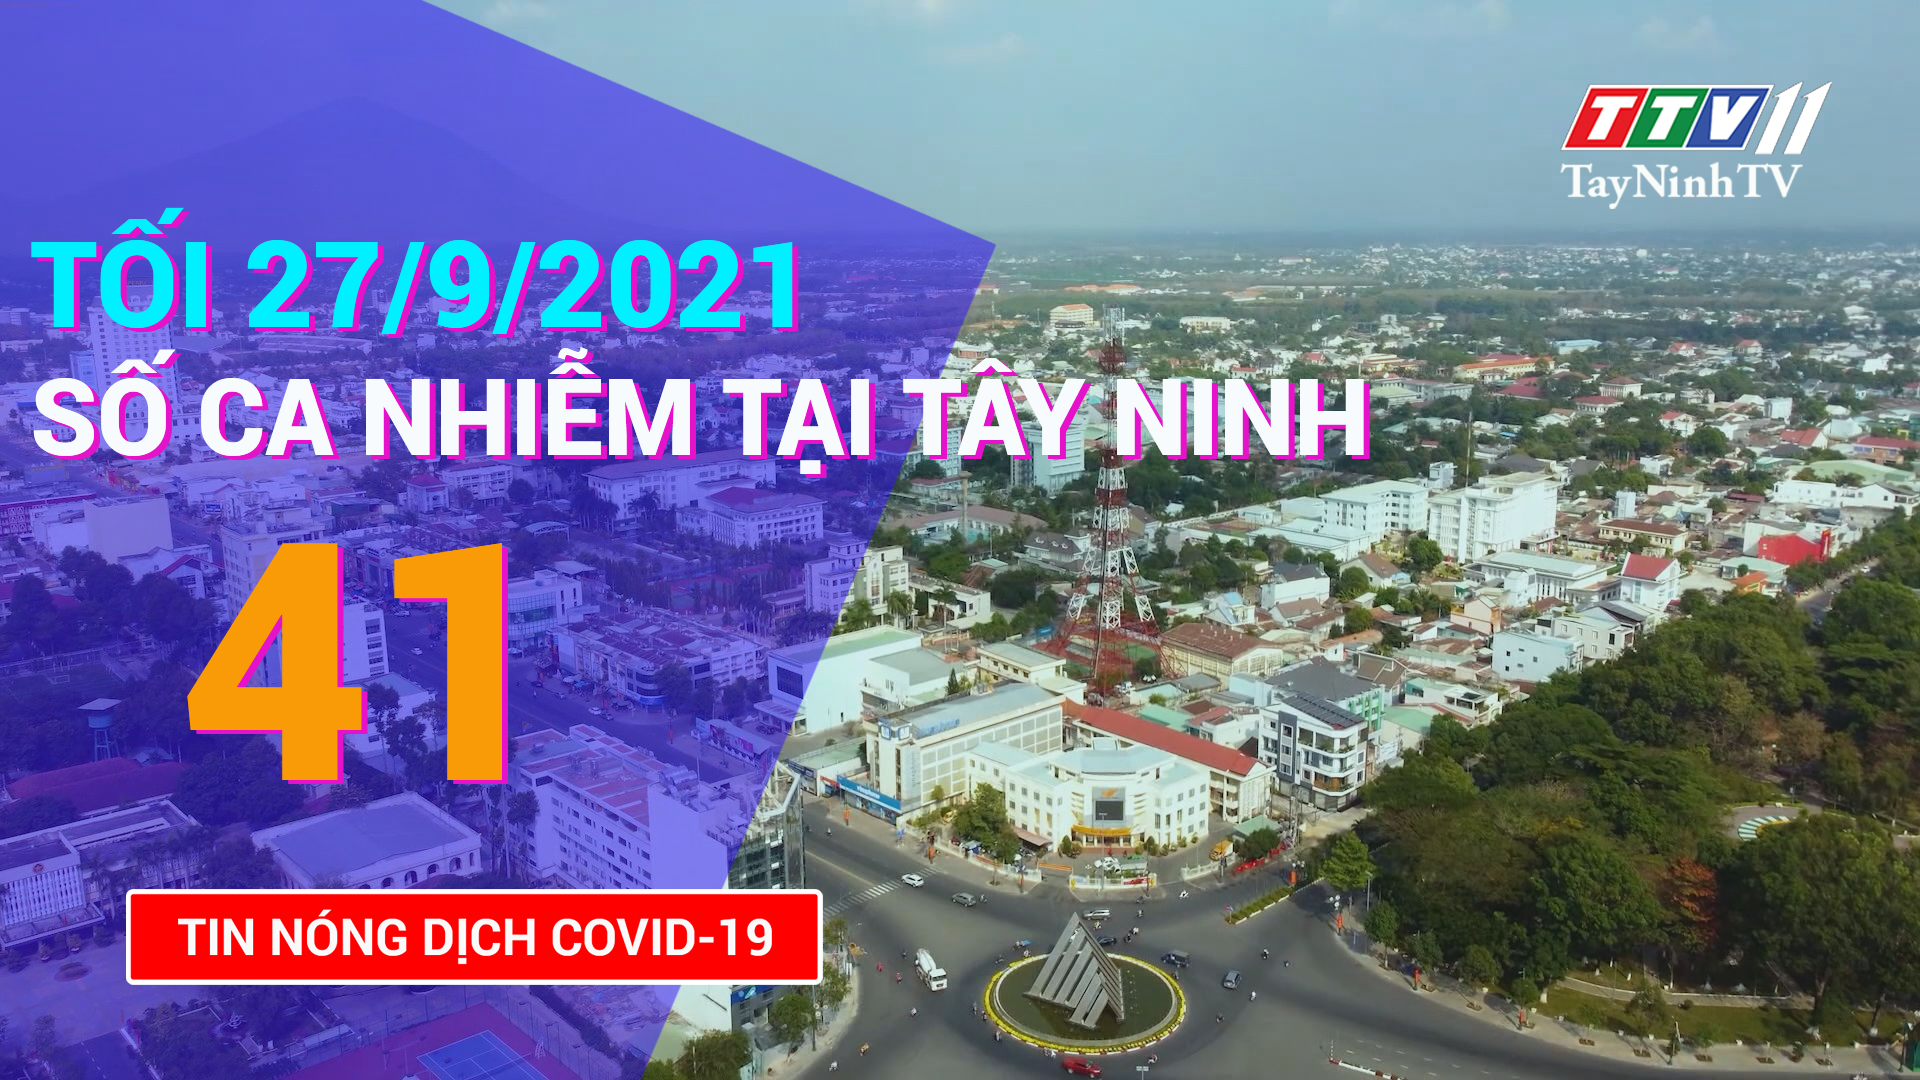 Tin tức Covid-19 tối 27/9/2021 | TayNinhTV